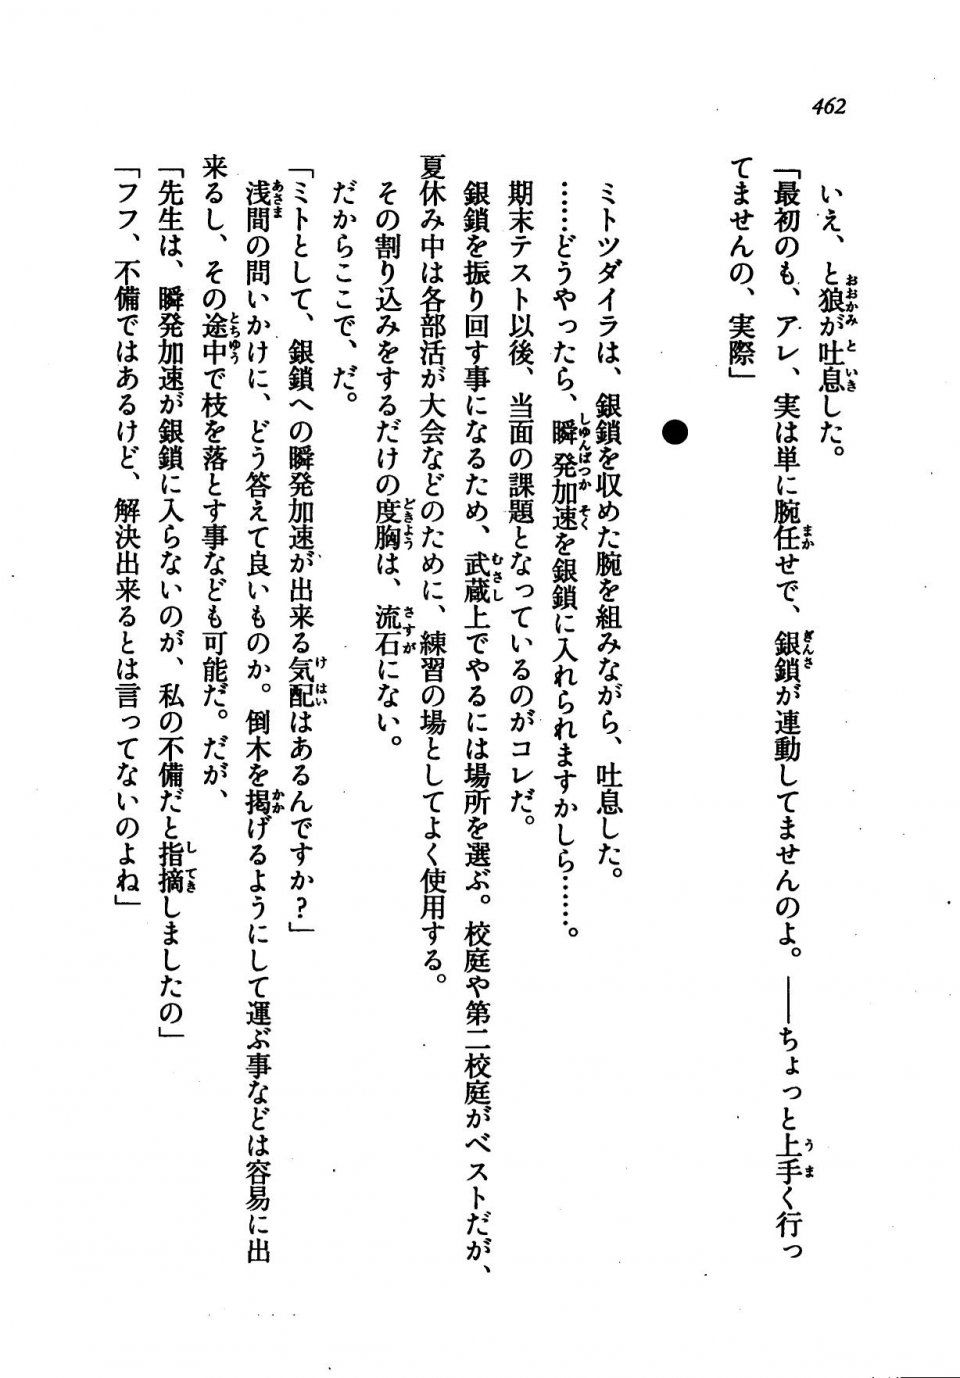 Kyoukai Senjou no Horizon LN Vol 21(8C) Part 1 - Photo #461